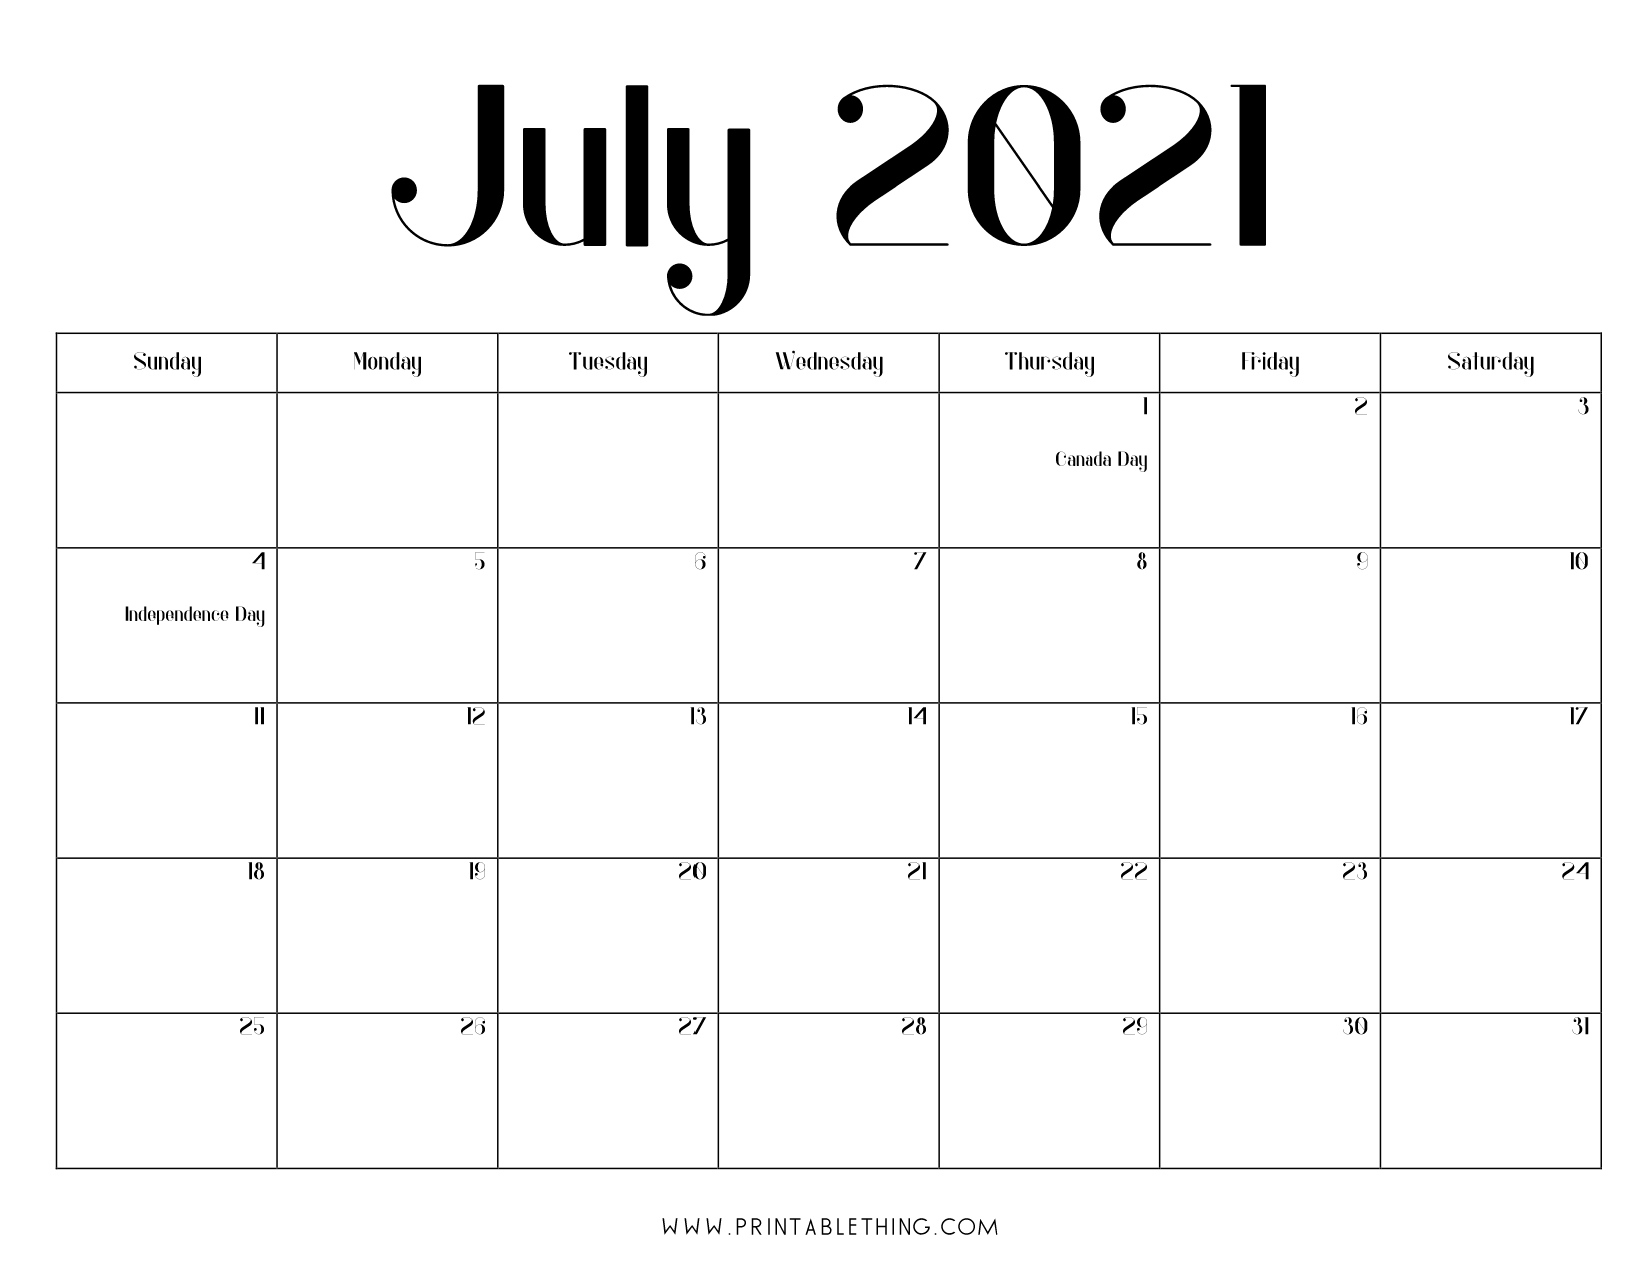 July 2021 Calendar Pdf, July 2021 Calendar Image, Print Pdf &amp; Image Www.wiki-Calendar.com July 2021